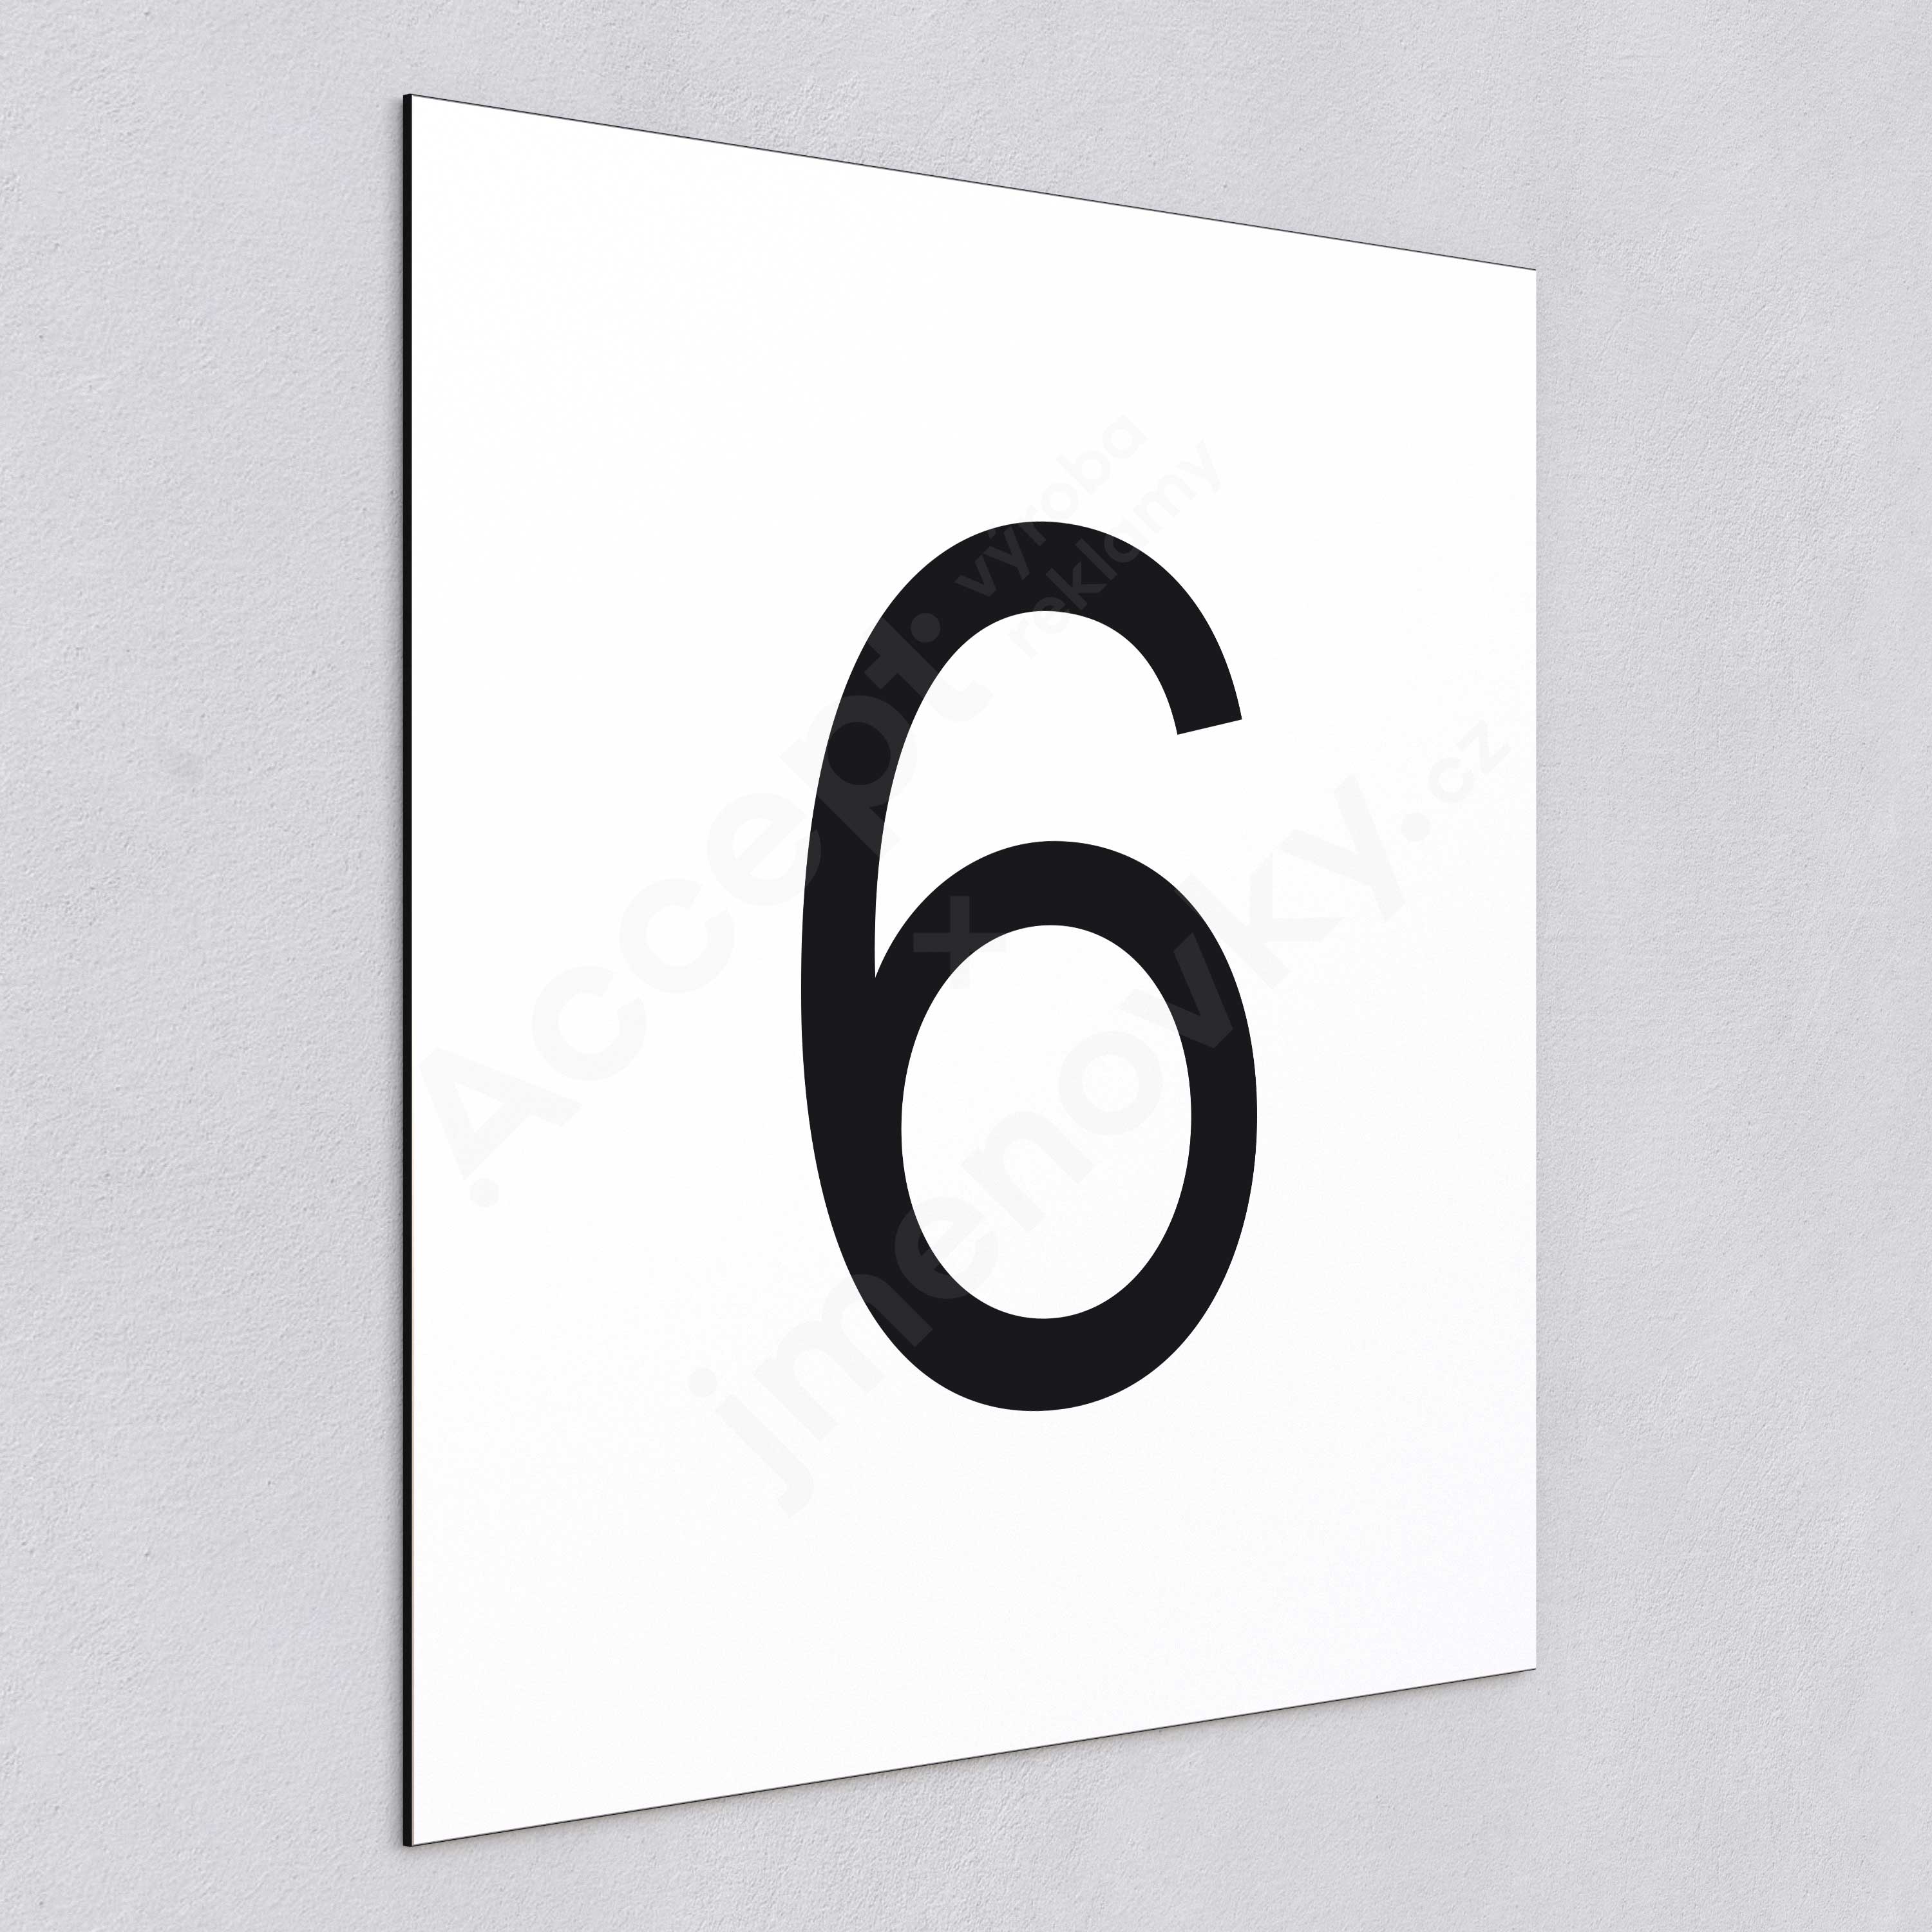 ACCEPT Označení podlaží - číslo "6" (300 x 300 mm) - bílá tabulka - černý popis